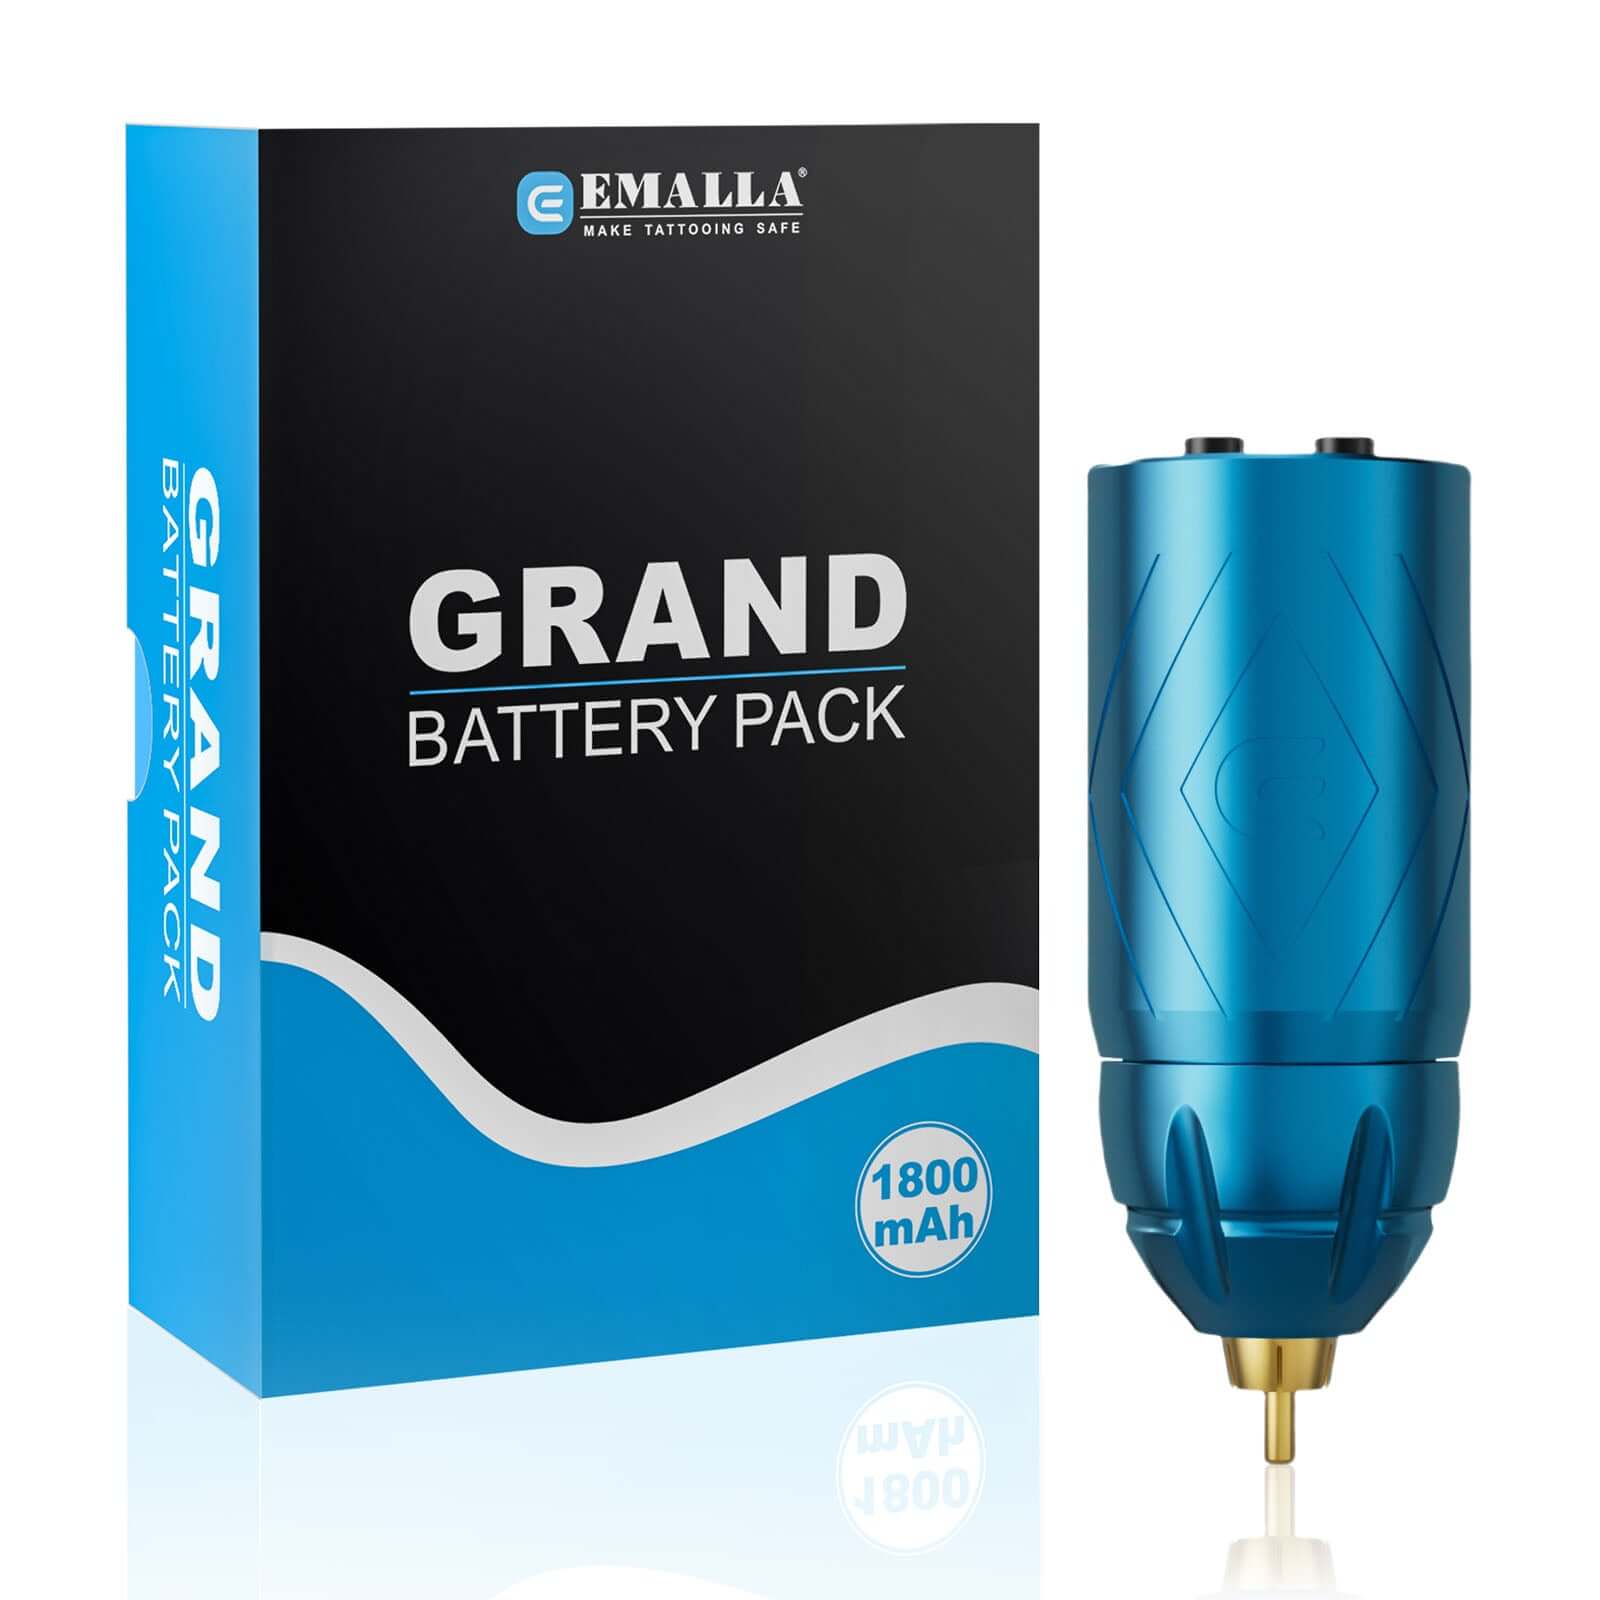 EMALLA GRAND Wireless Tattoo Battery Power Supply RCA Connect 1800mAh (Blue)